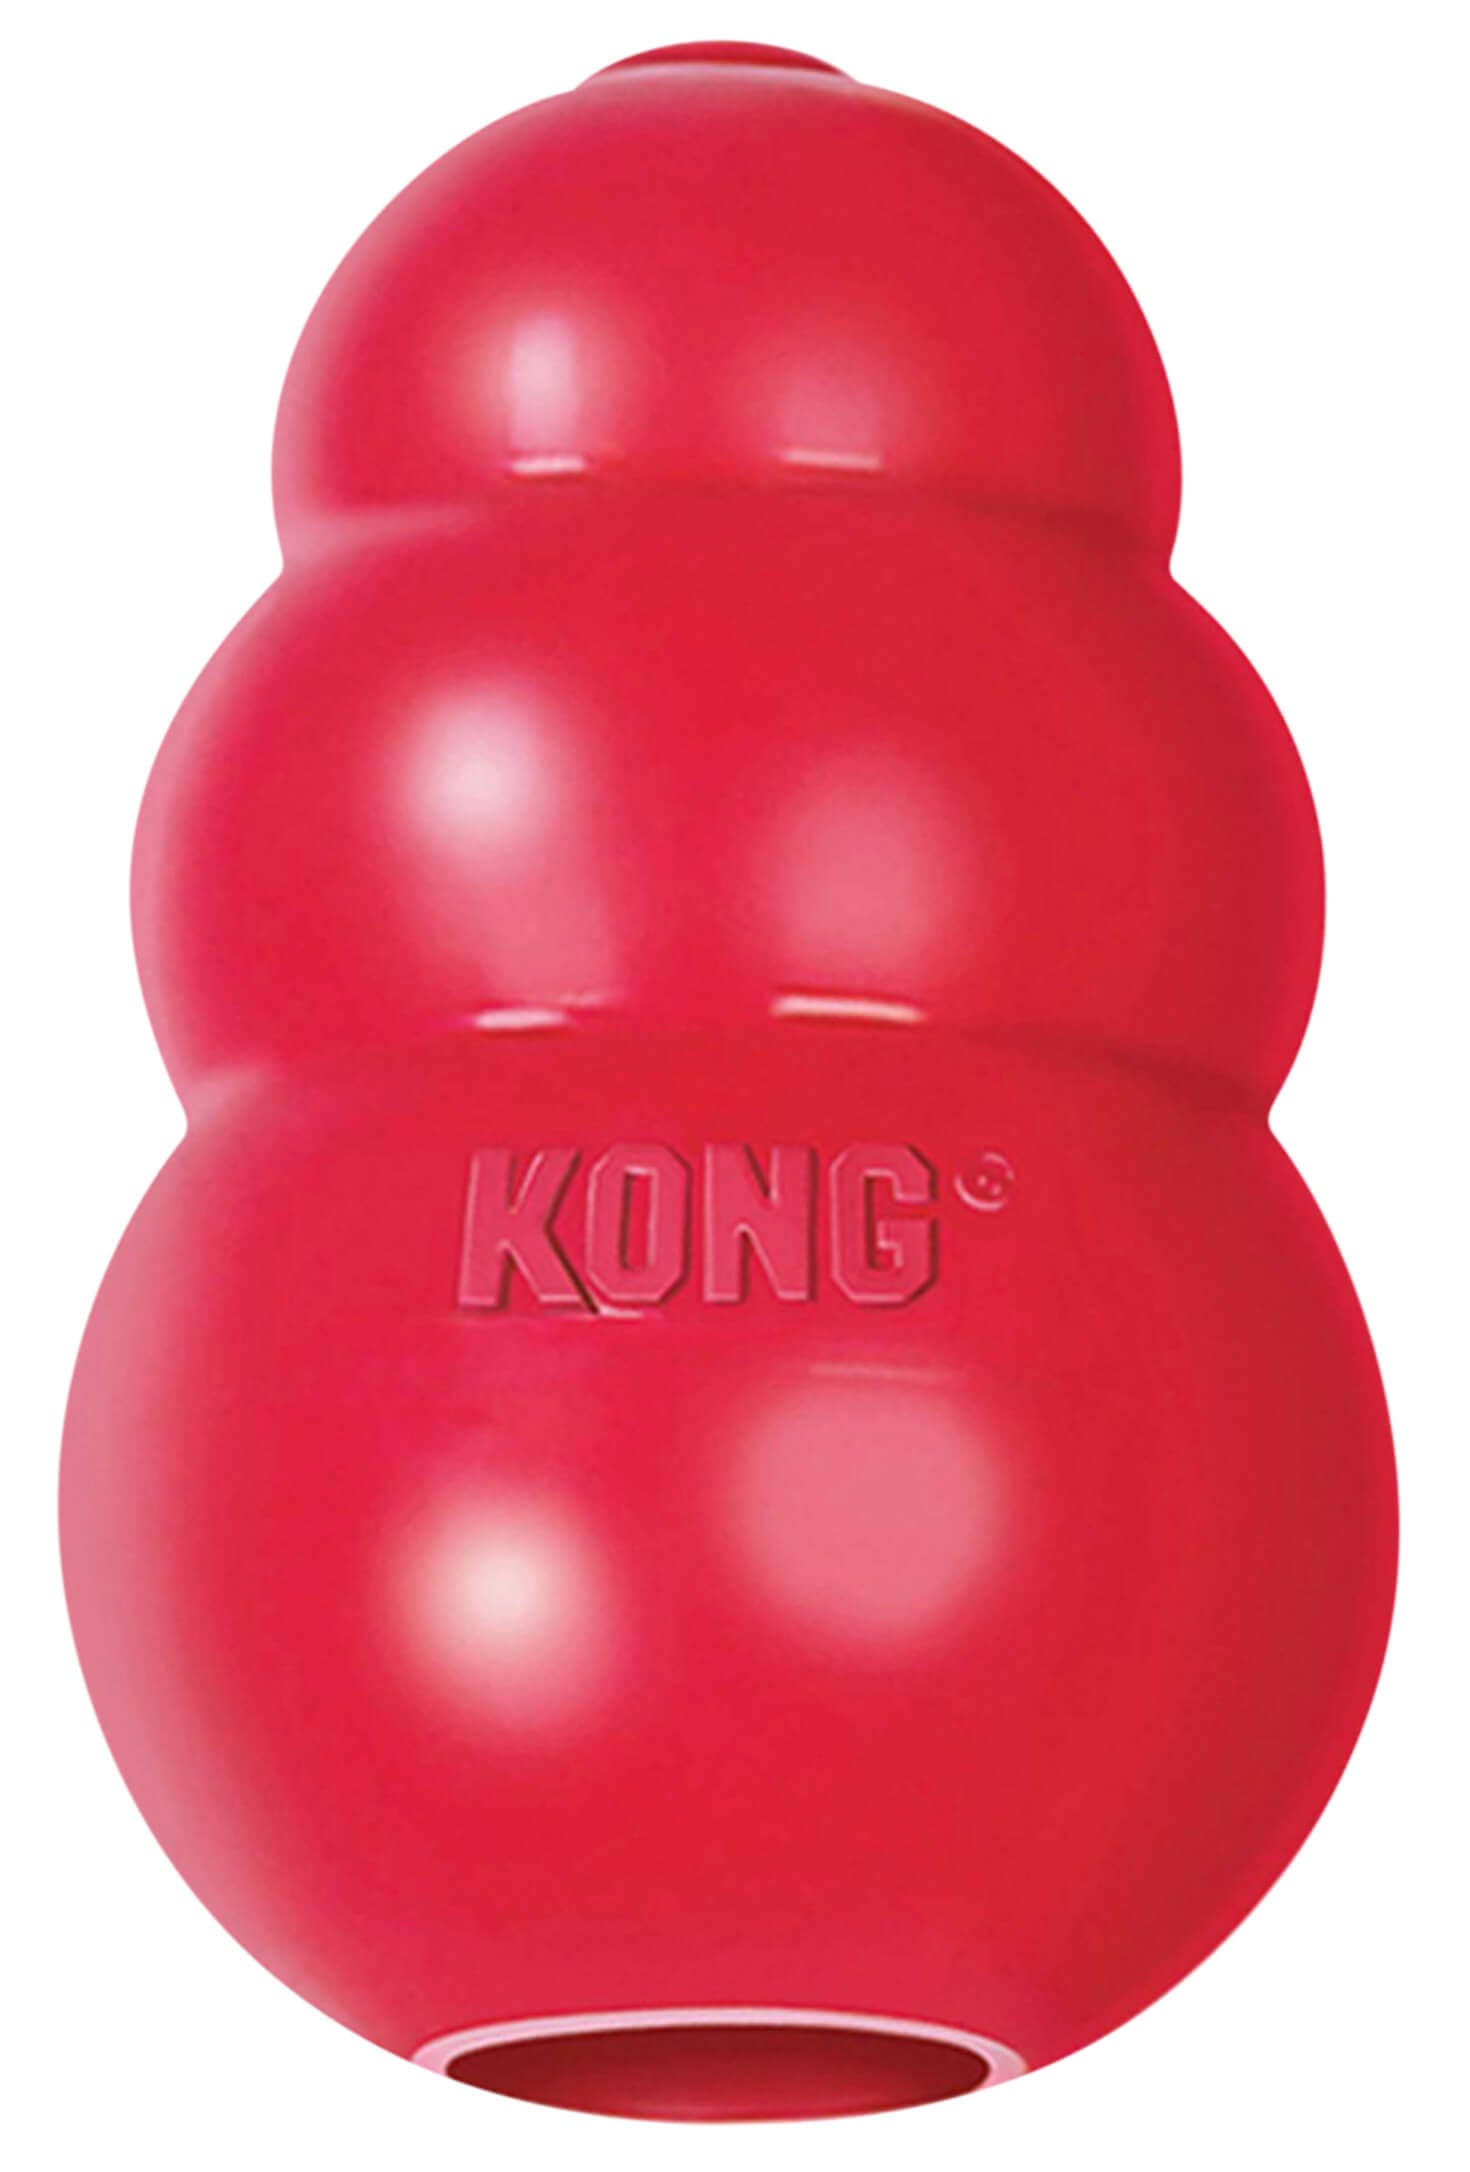 Kong Classic Dog Toy - Red, Medium